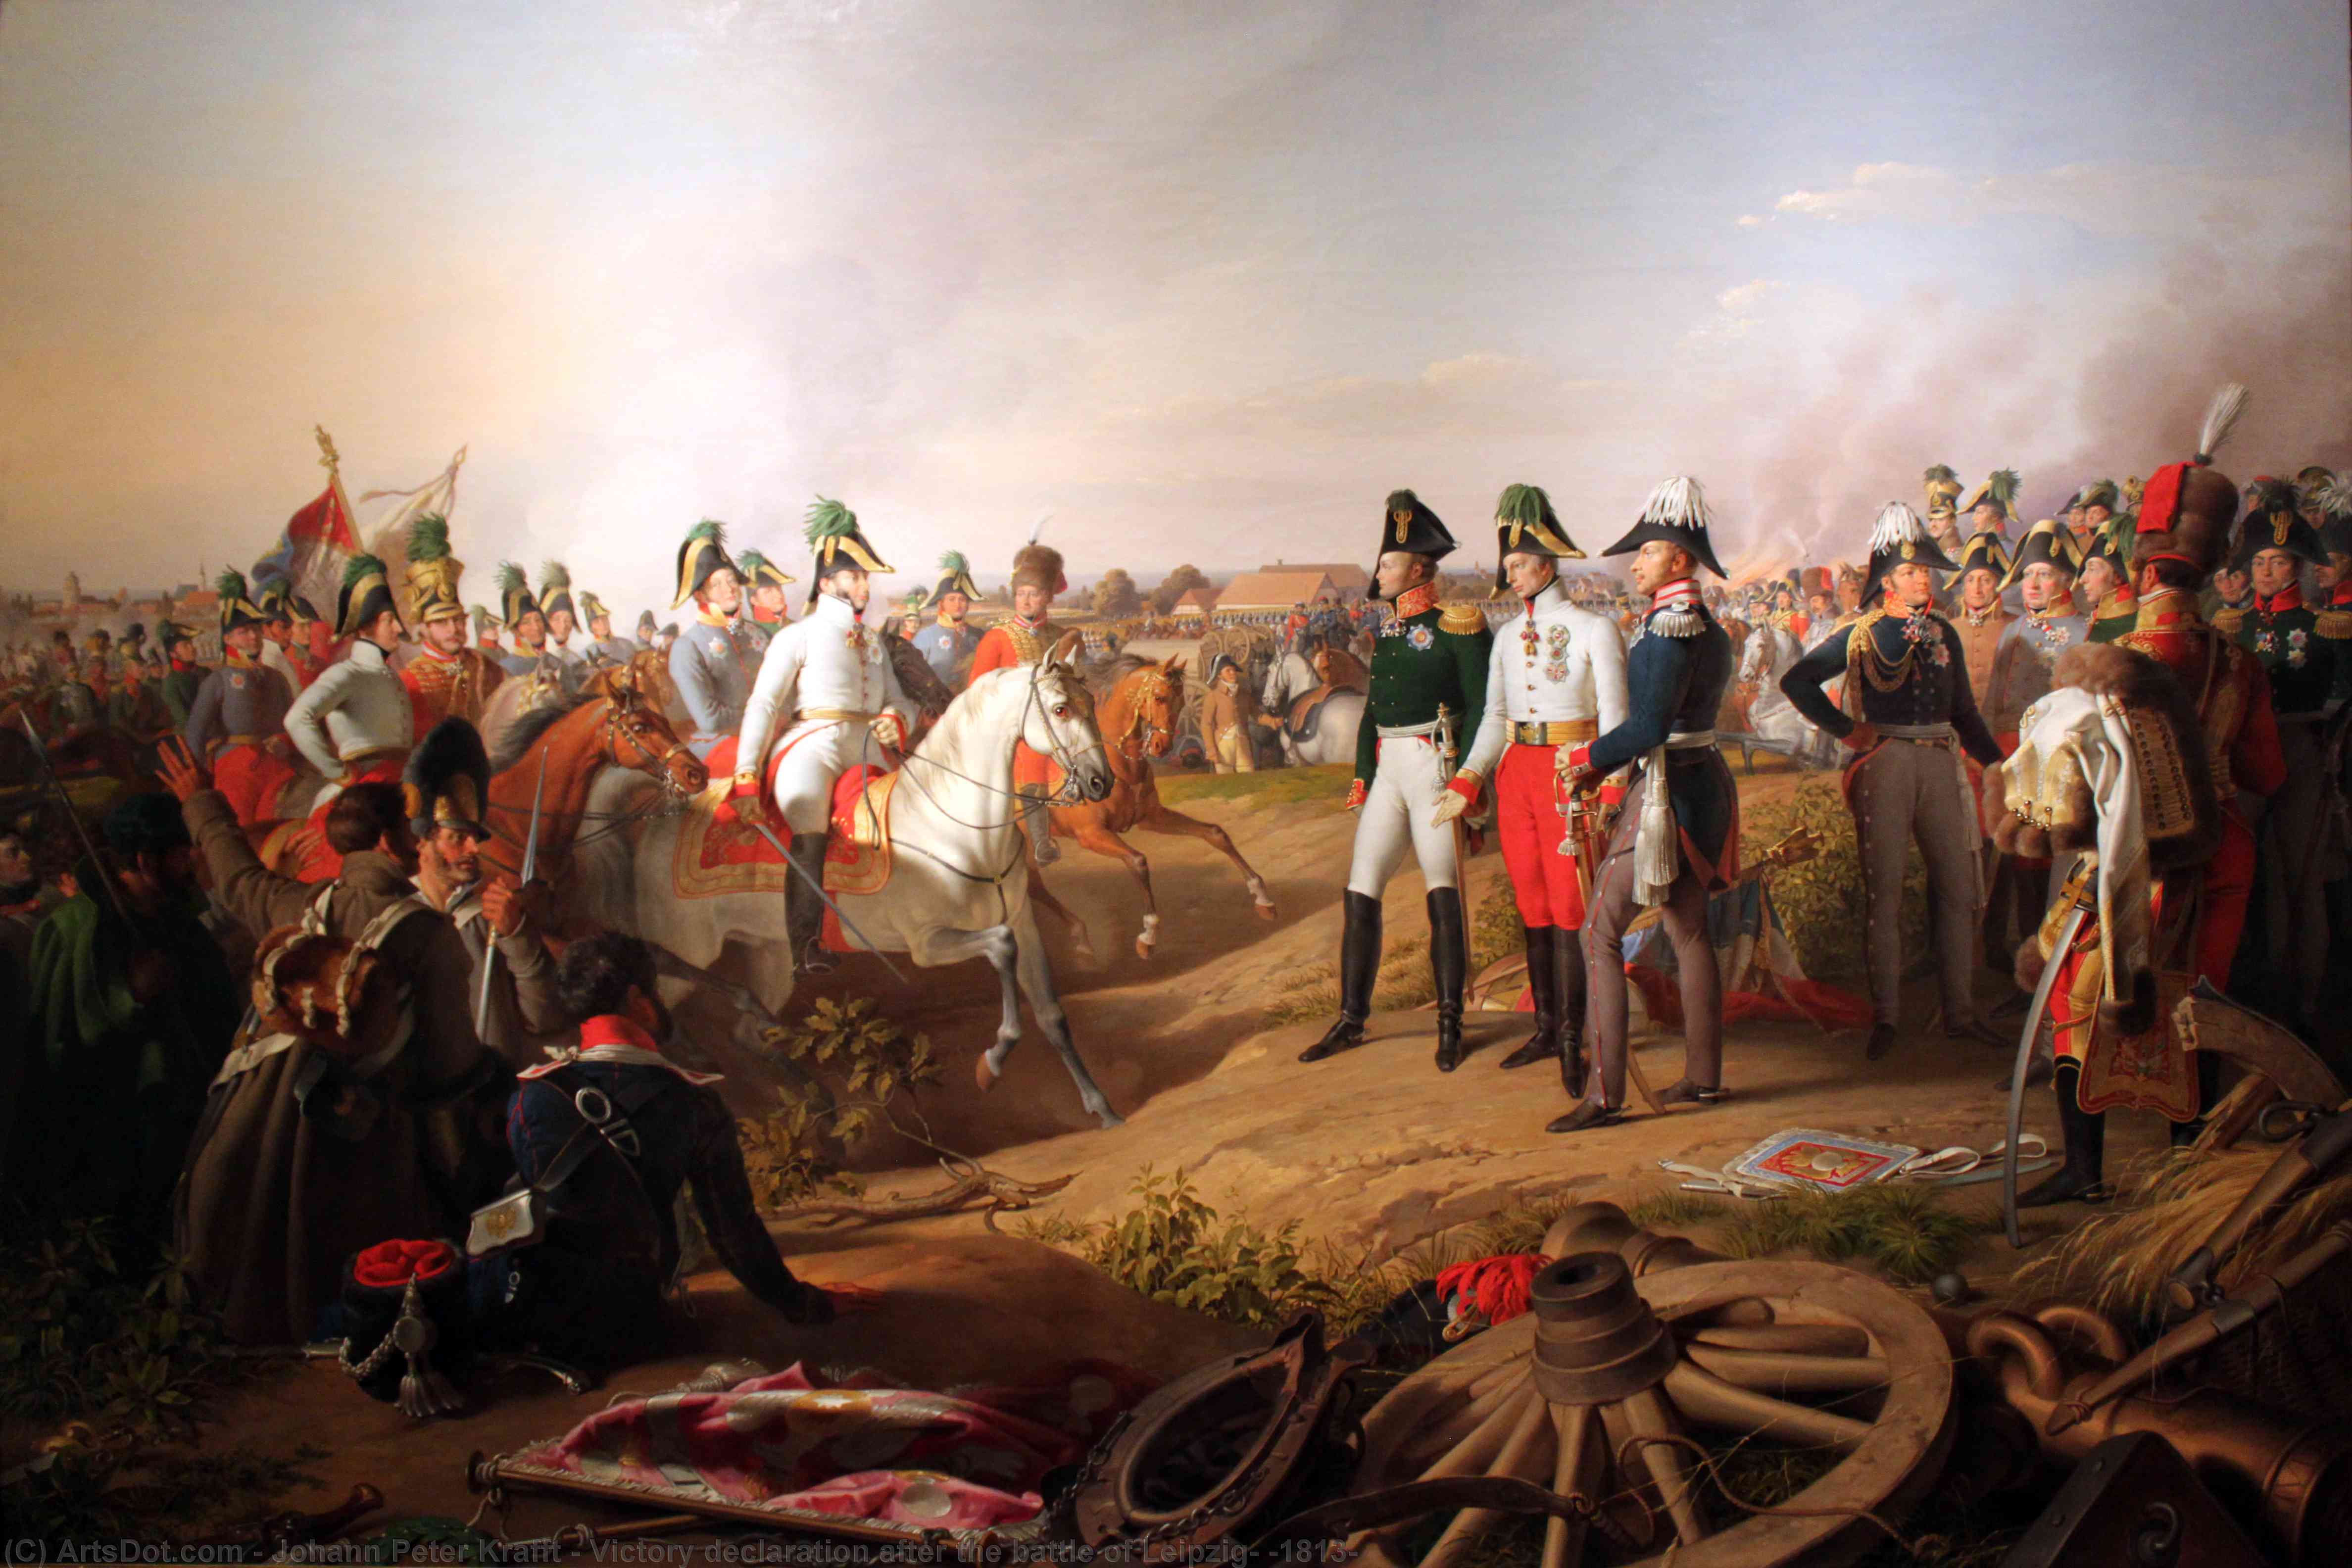 Wikioo.org - Encyklopedia Sztuk Pięknych - Malarstwo, Grafika Johann Peter Krafft - Victory declaration after the battle of Leipzig, (1813)